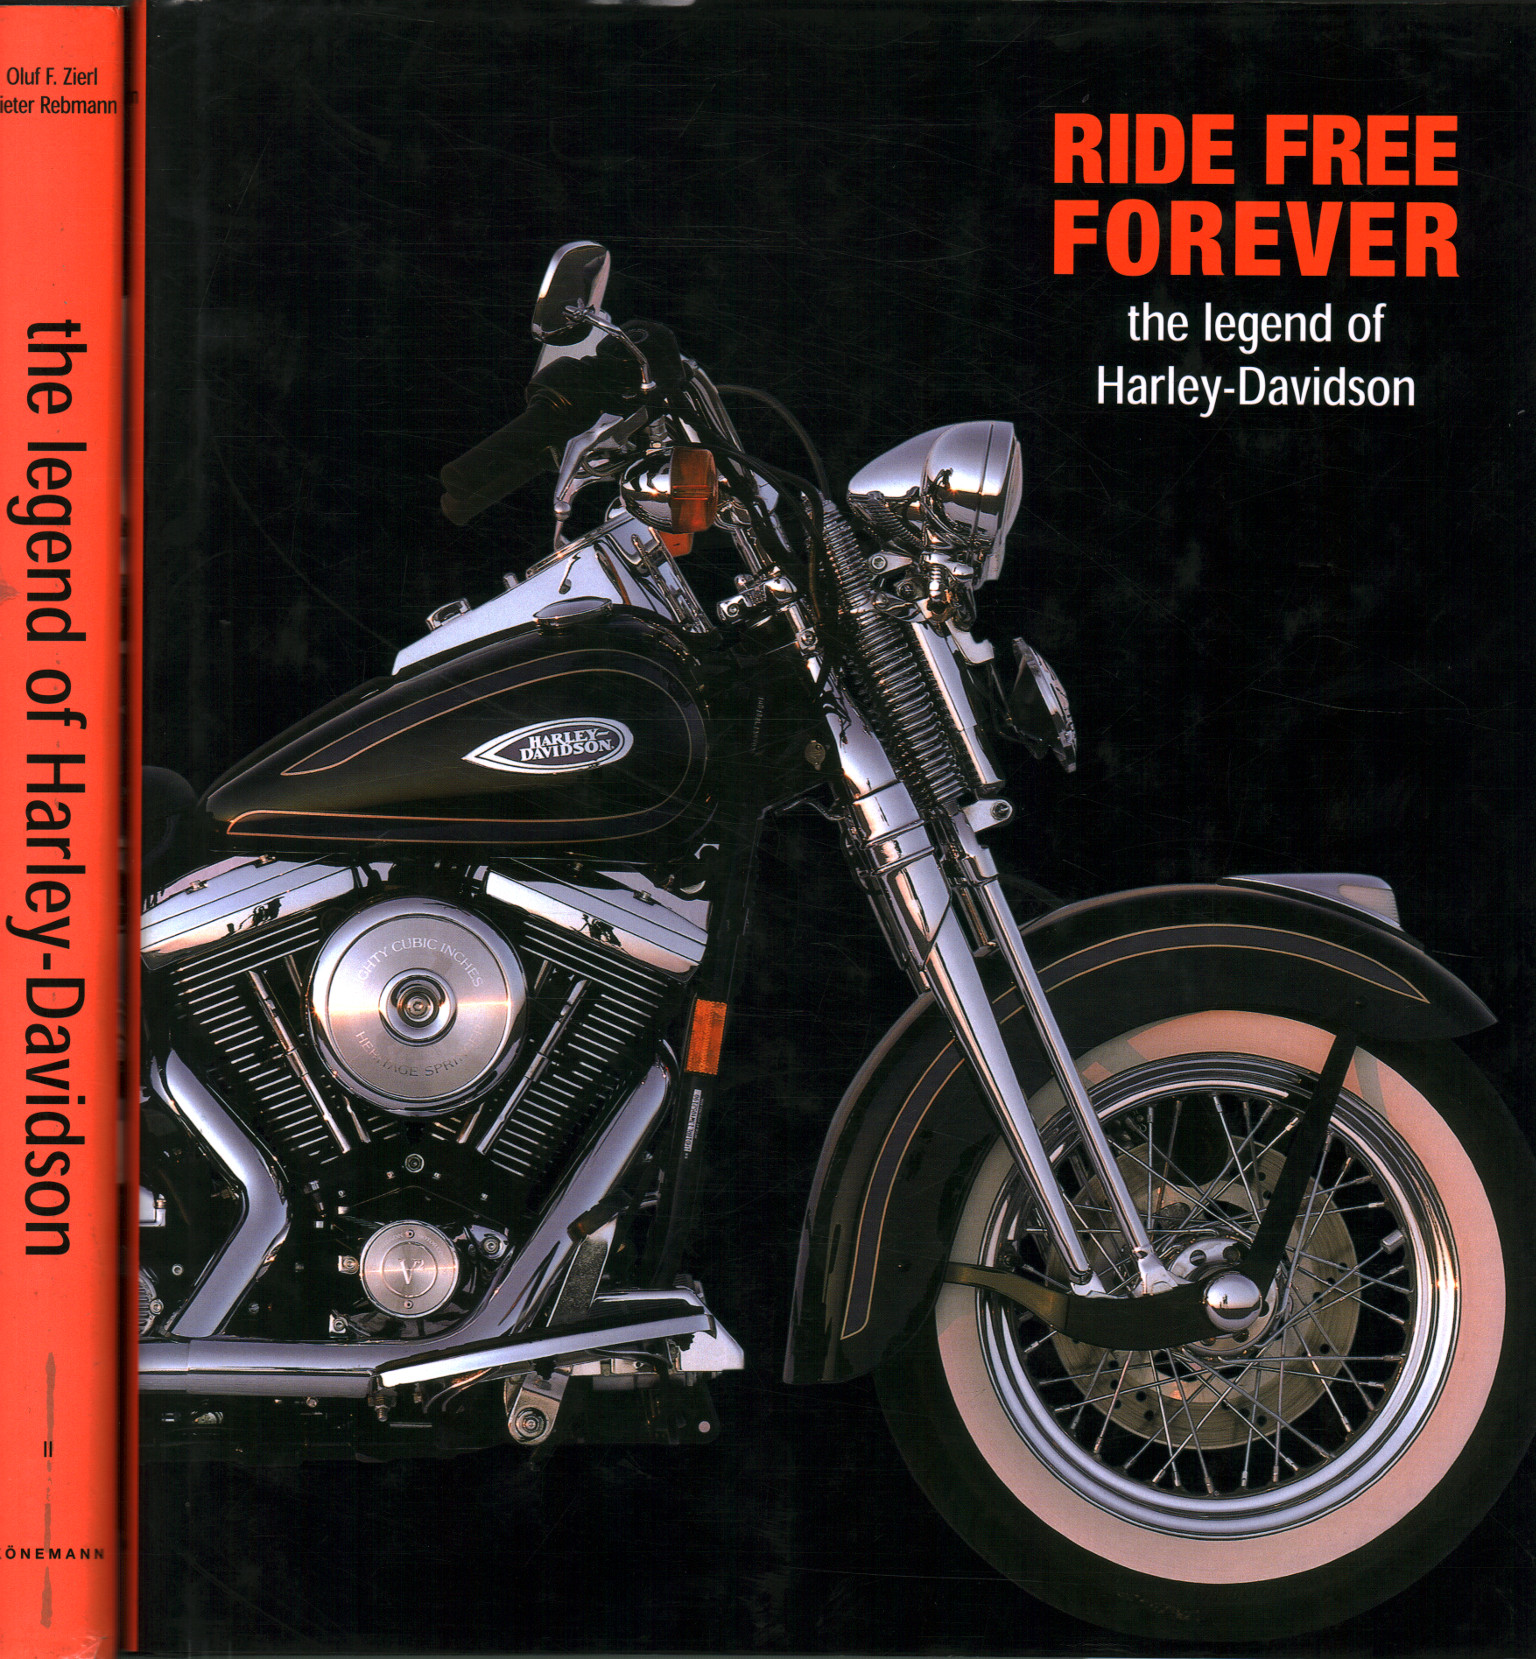 Viaja gratis para siempre. La leyenda de Harley-Davidson (2 volúmenes)